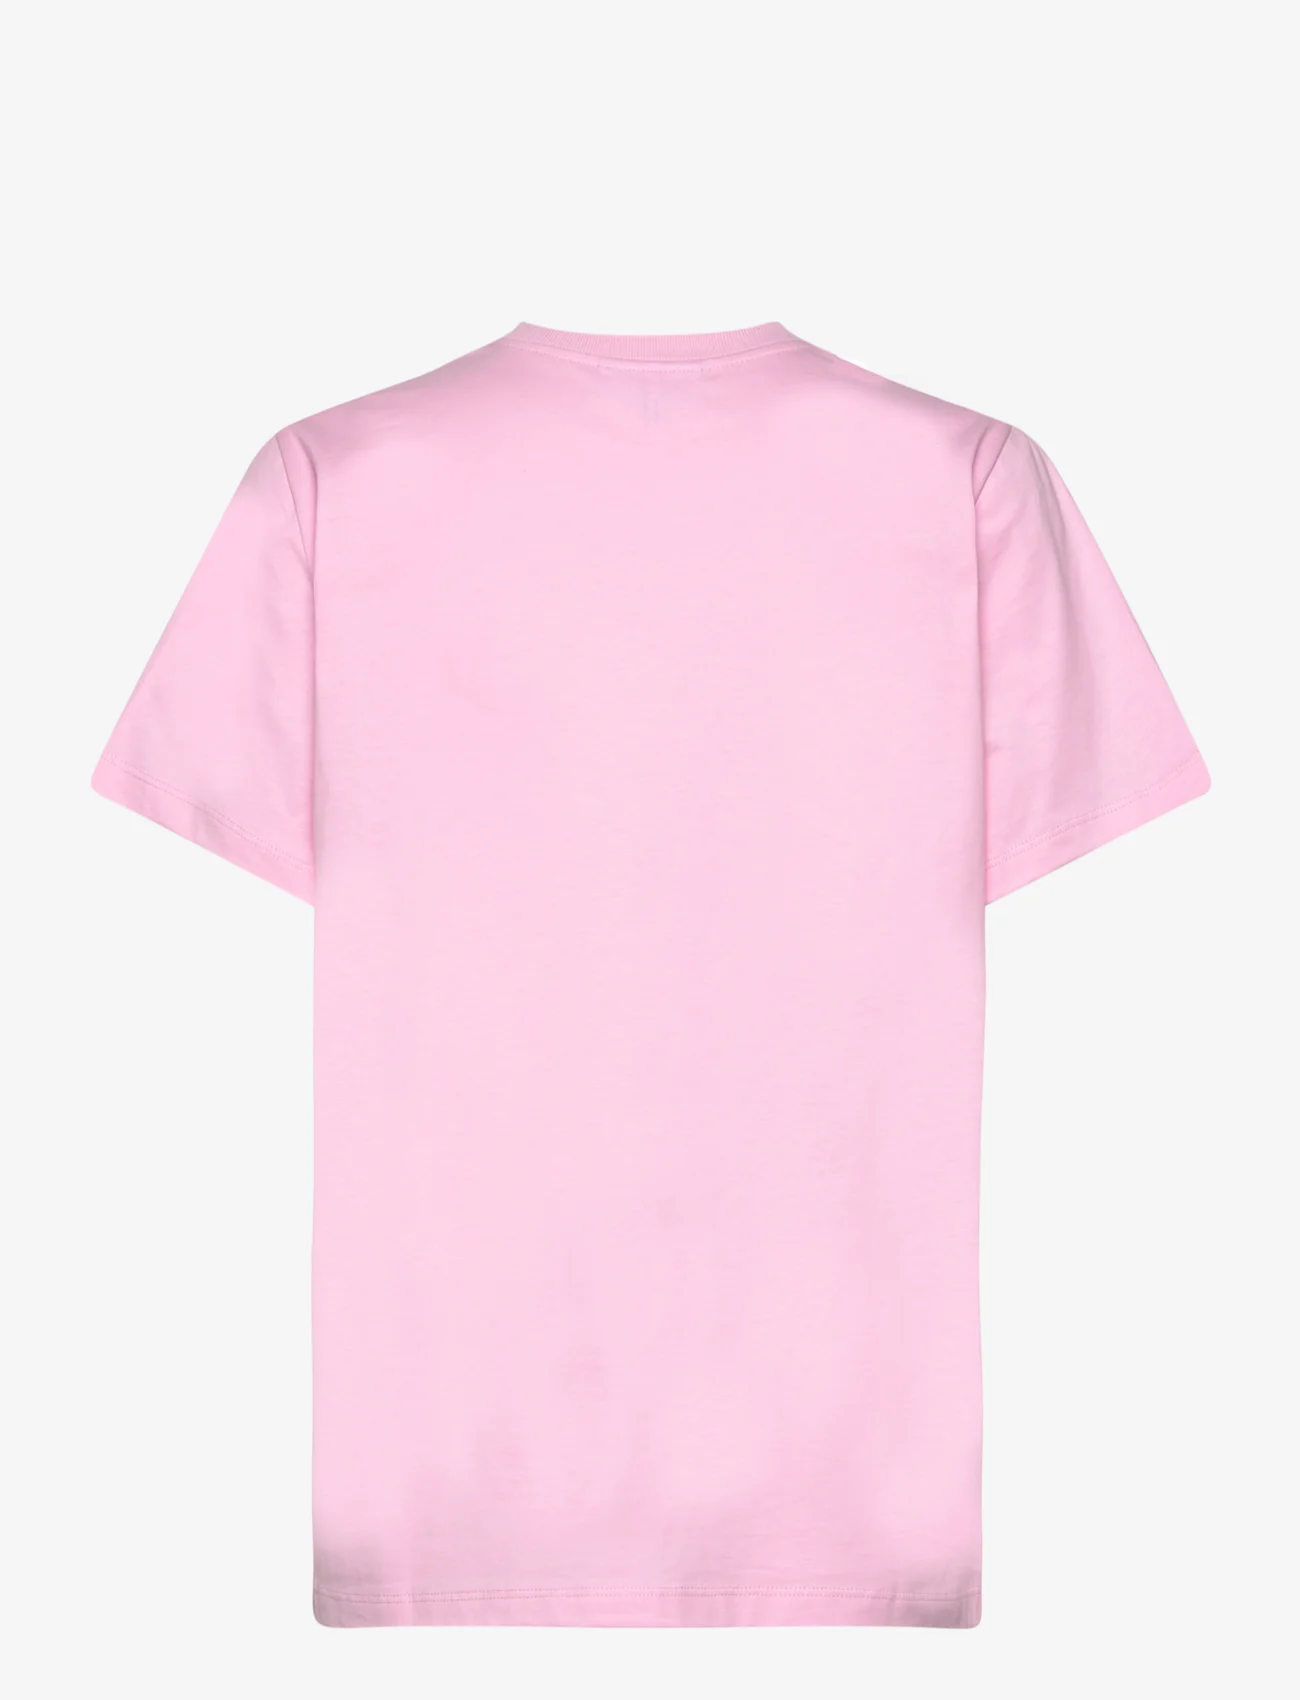 Ganni - Basic Cotton Jersey - t-shirts - lilac sachet - 1